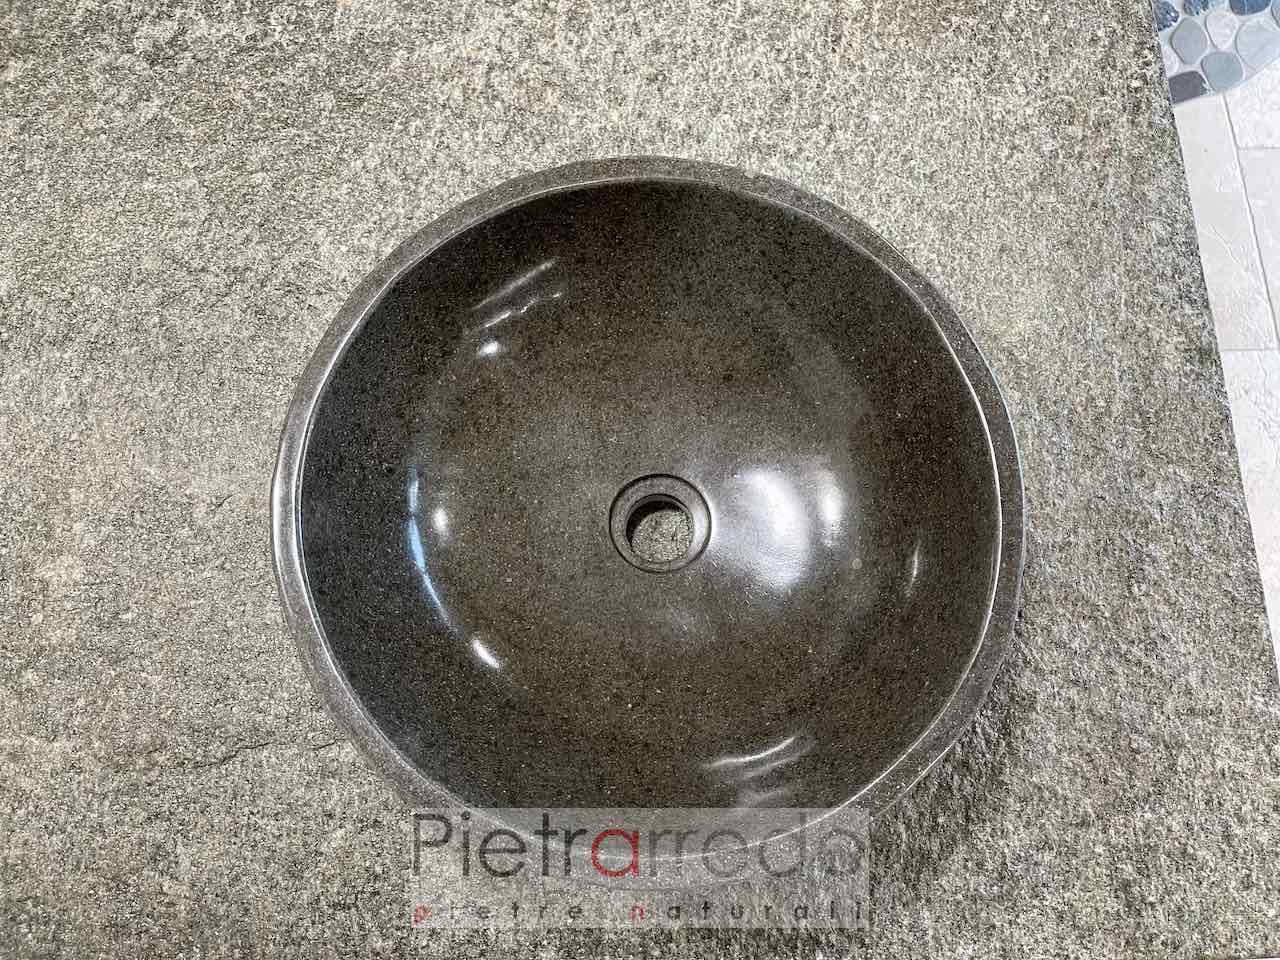 Round circular sink for bathroom countertop black black price by pietrarredo river stone onsale